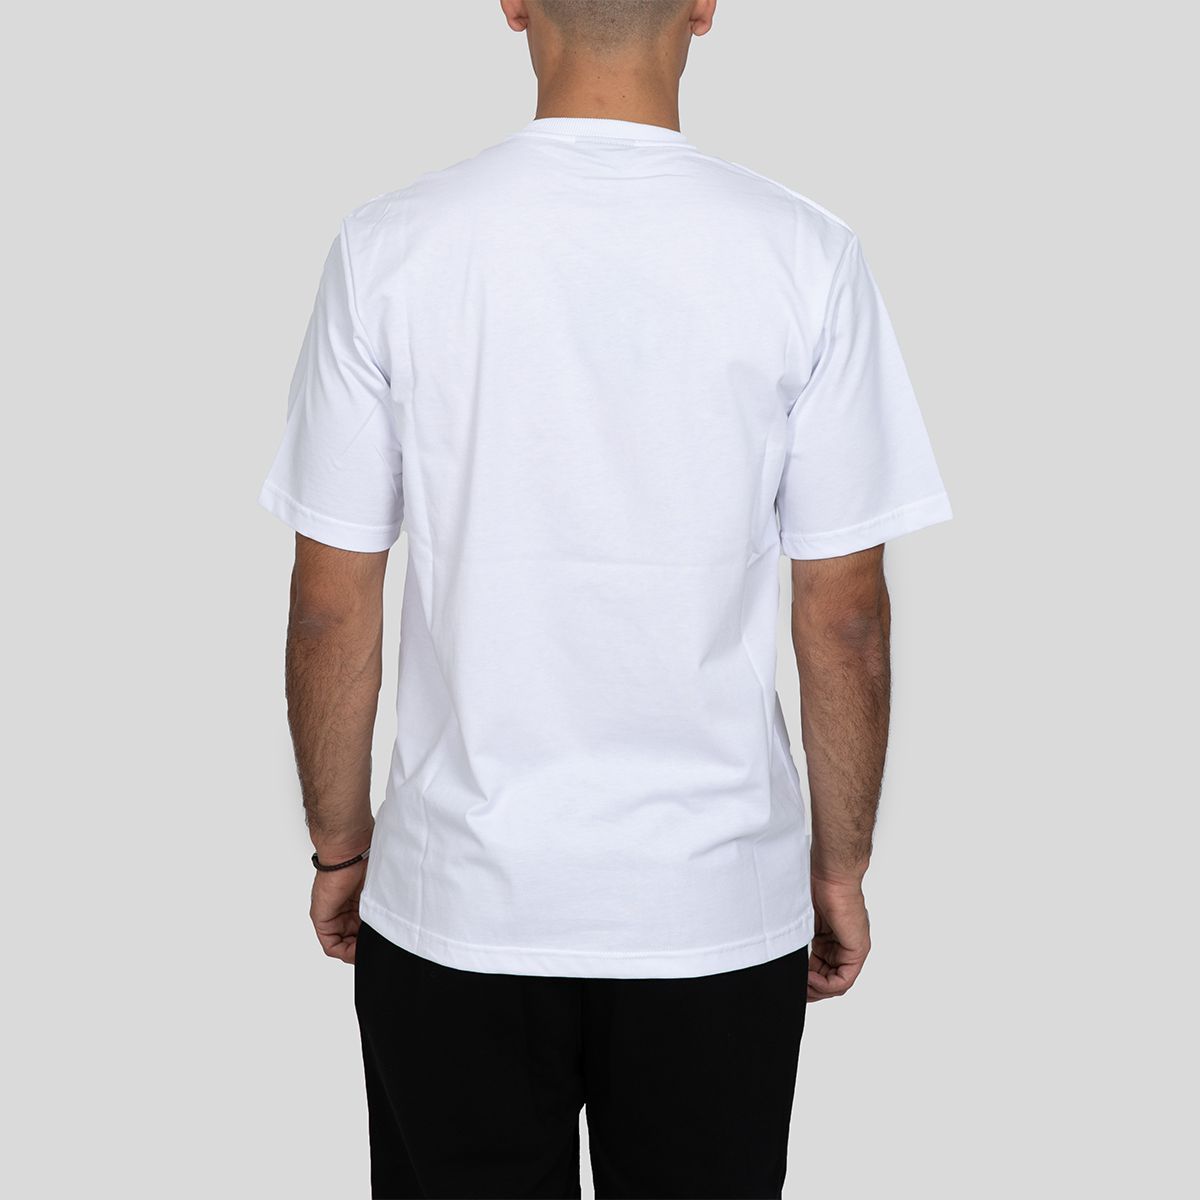 'Rebirth' Print White T-Shirt